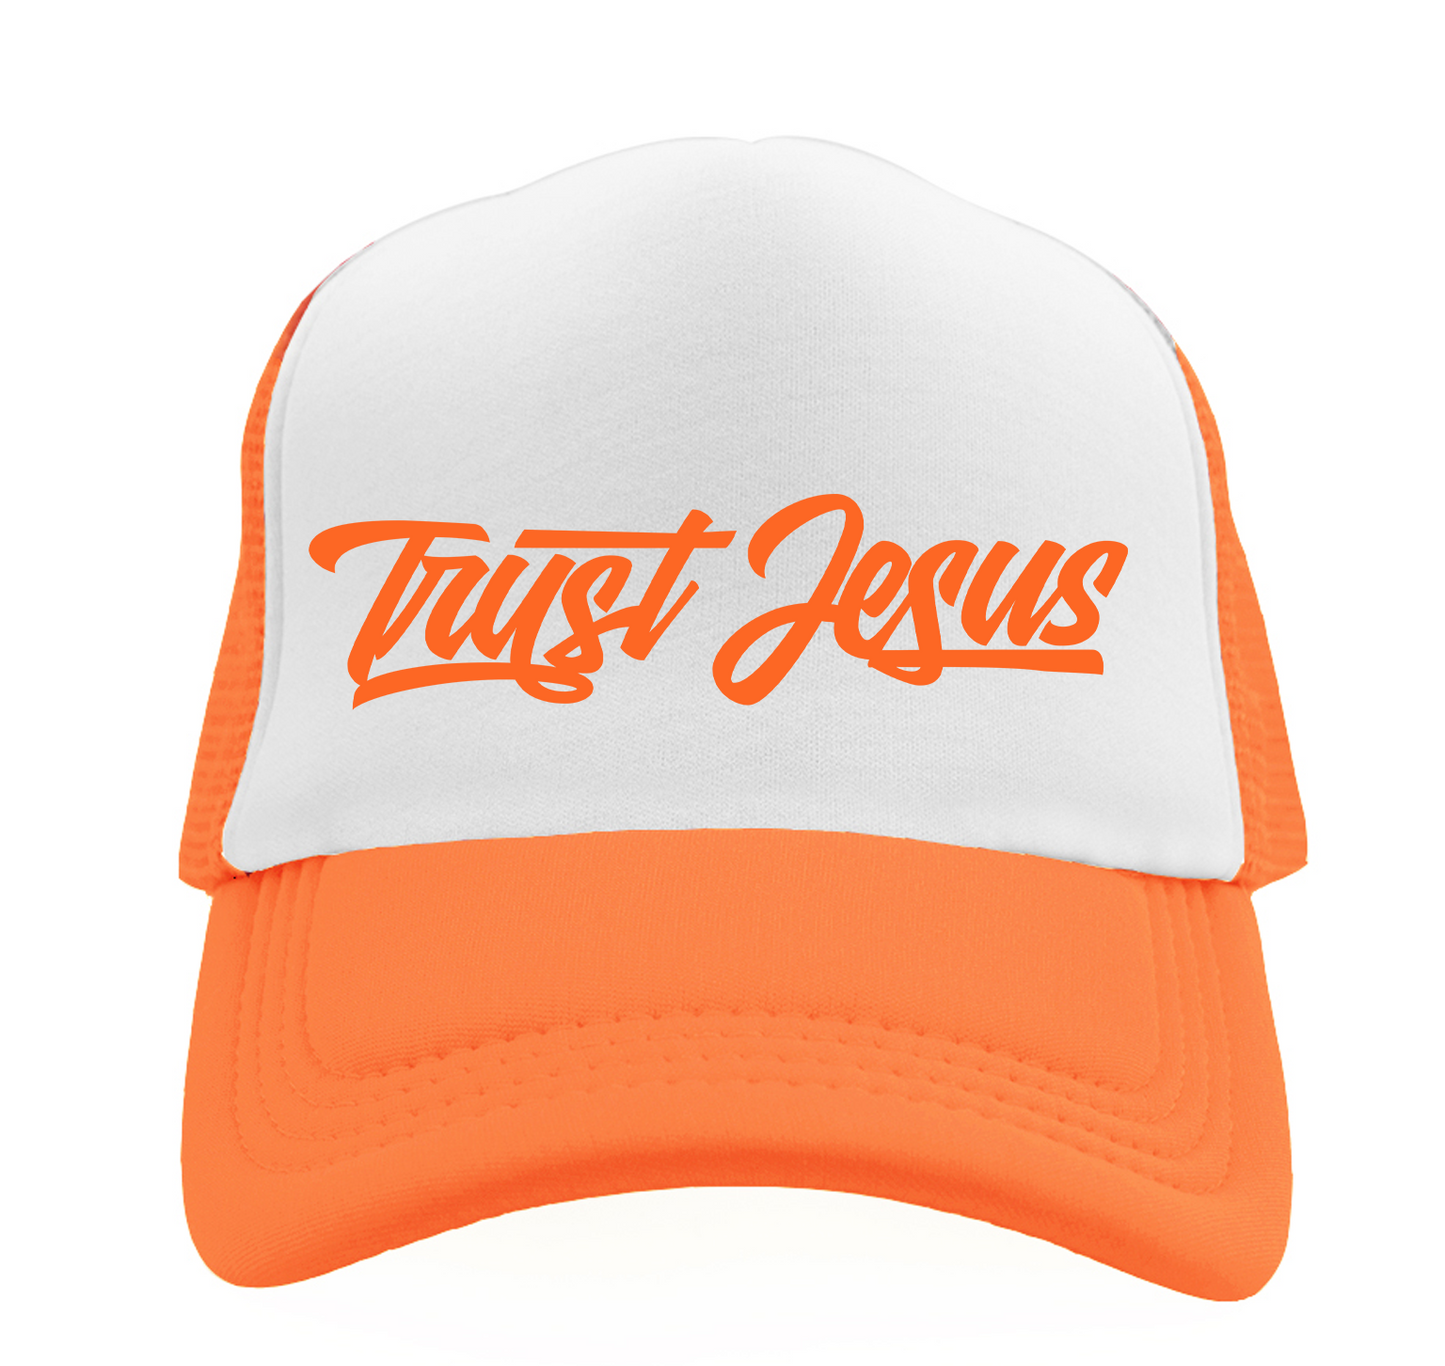 TRUST JESUS - T-SHIRT/HAT - ORANGE/WHITE